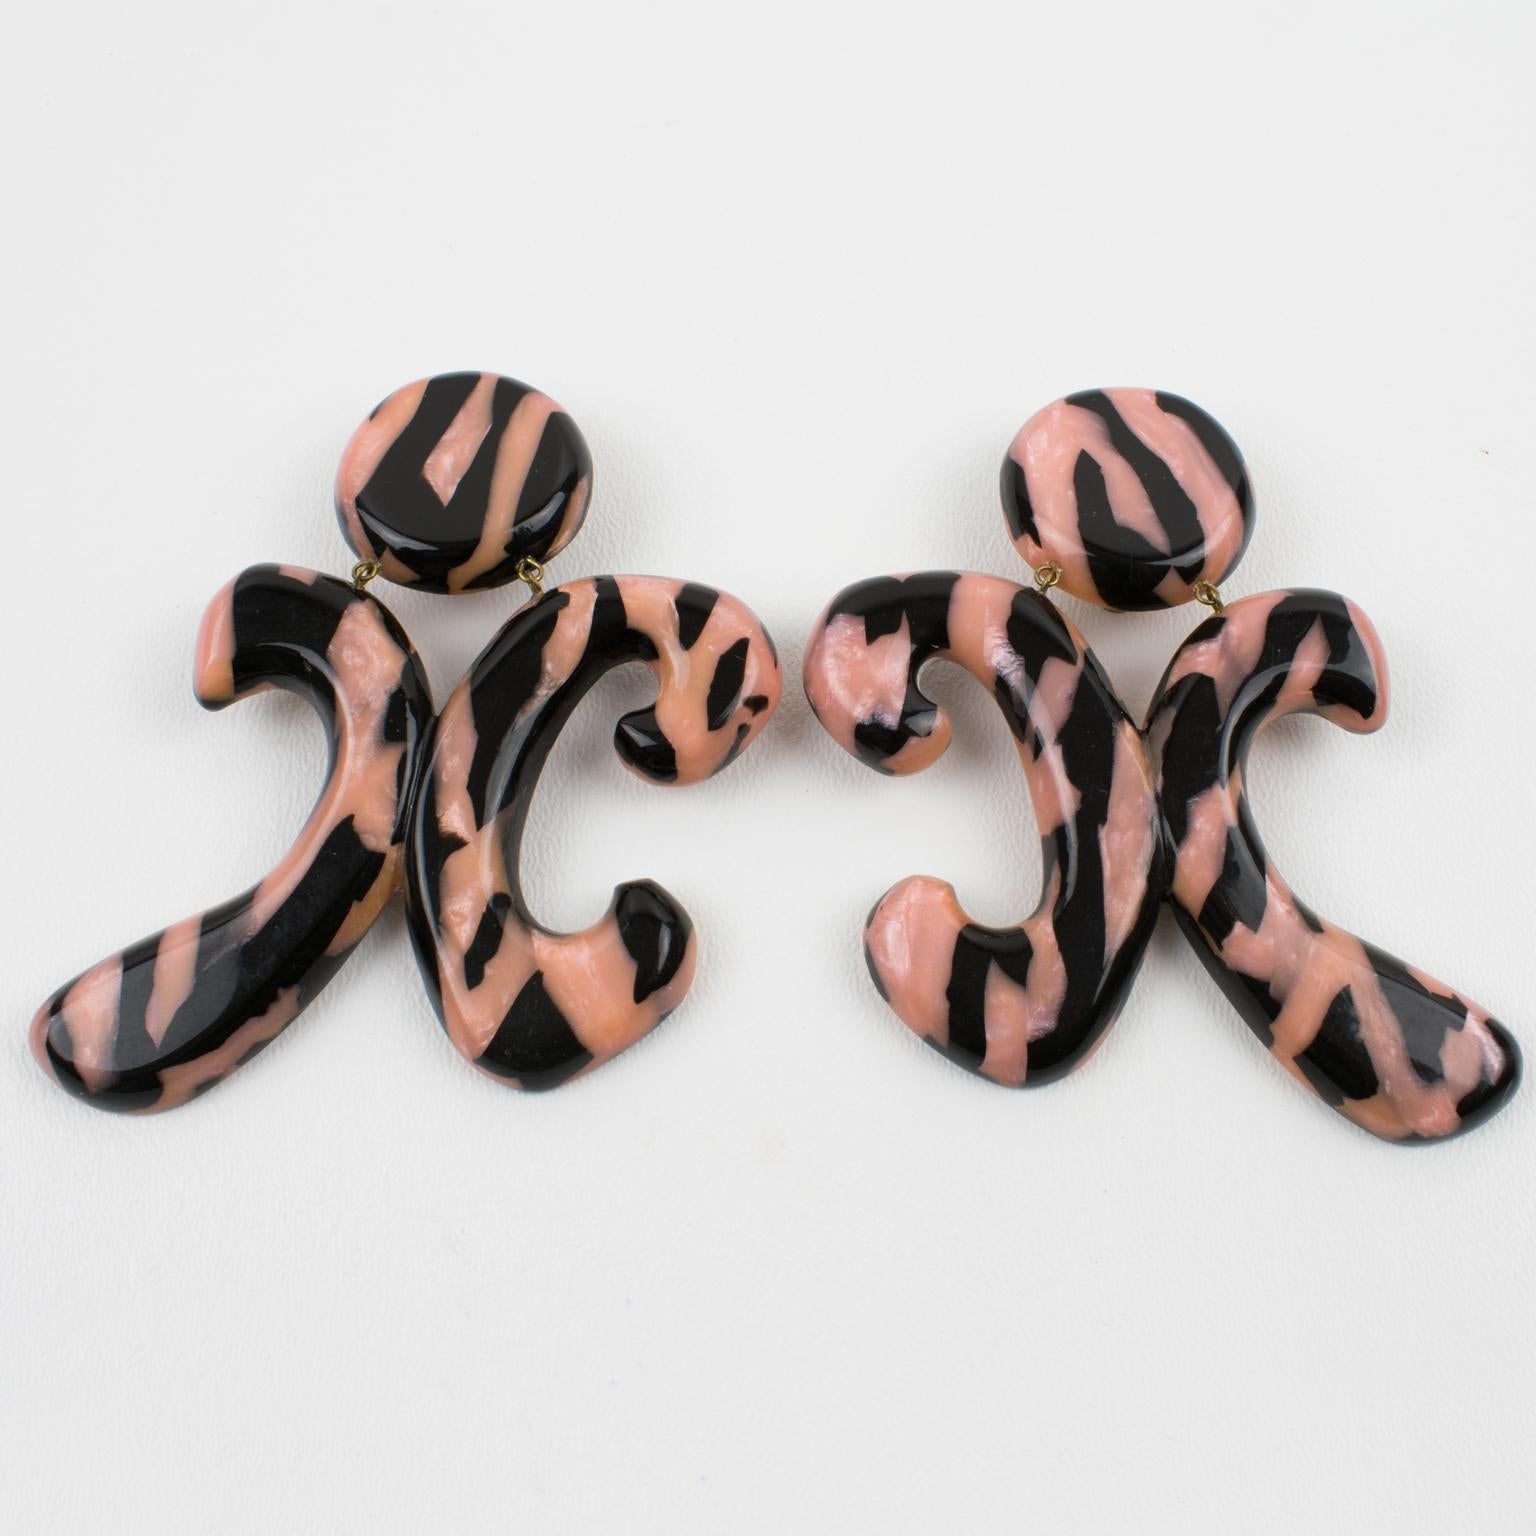 Modernist Christian Lacroix Massive Resin Clip Earrings Black and Pink Zebra Pattern For Sale